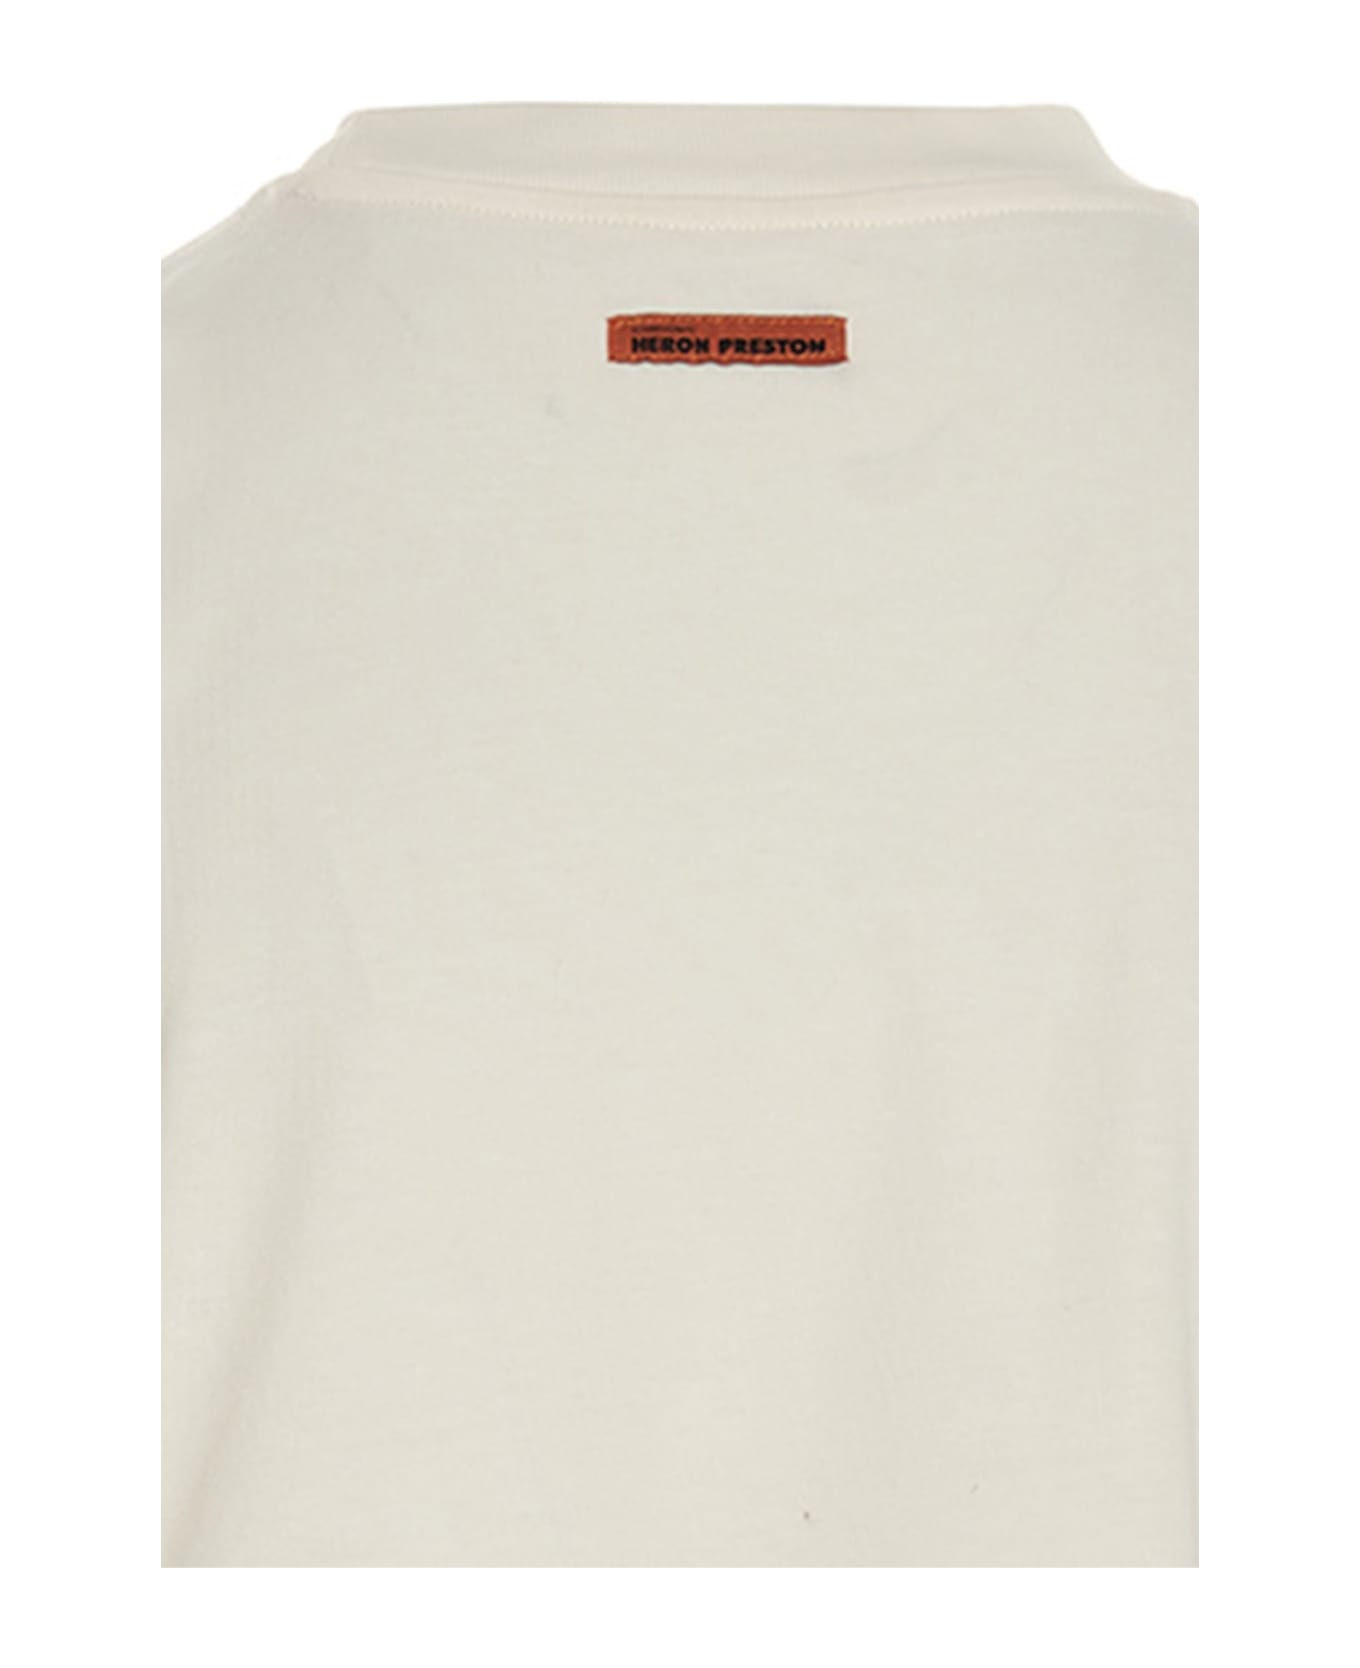 HERON PRESTON 'hpny' Cropped T-shirt - White/Black Tシャツ